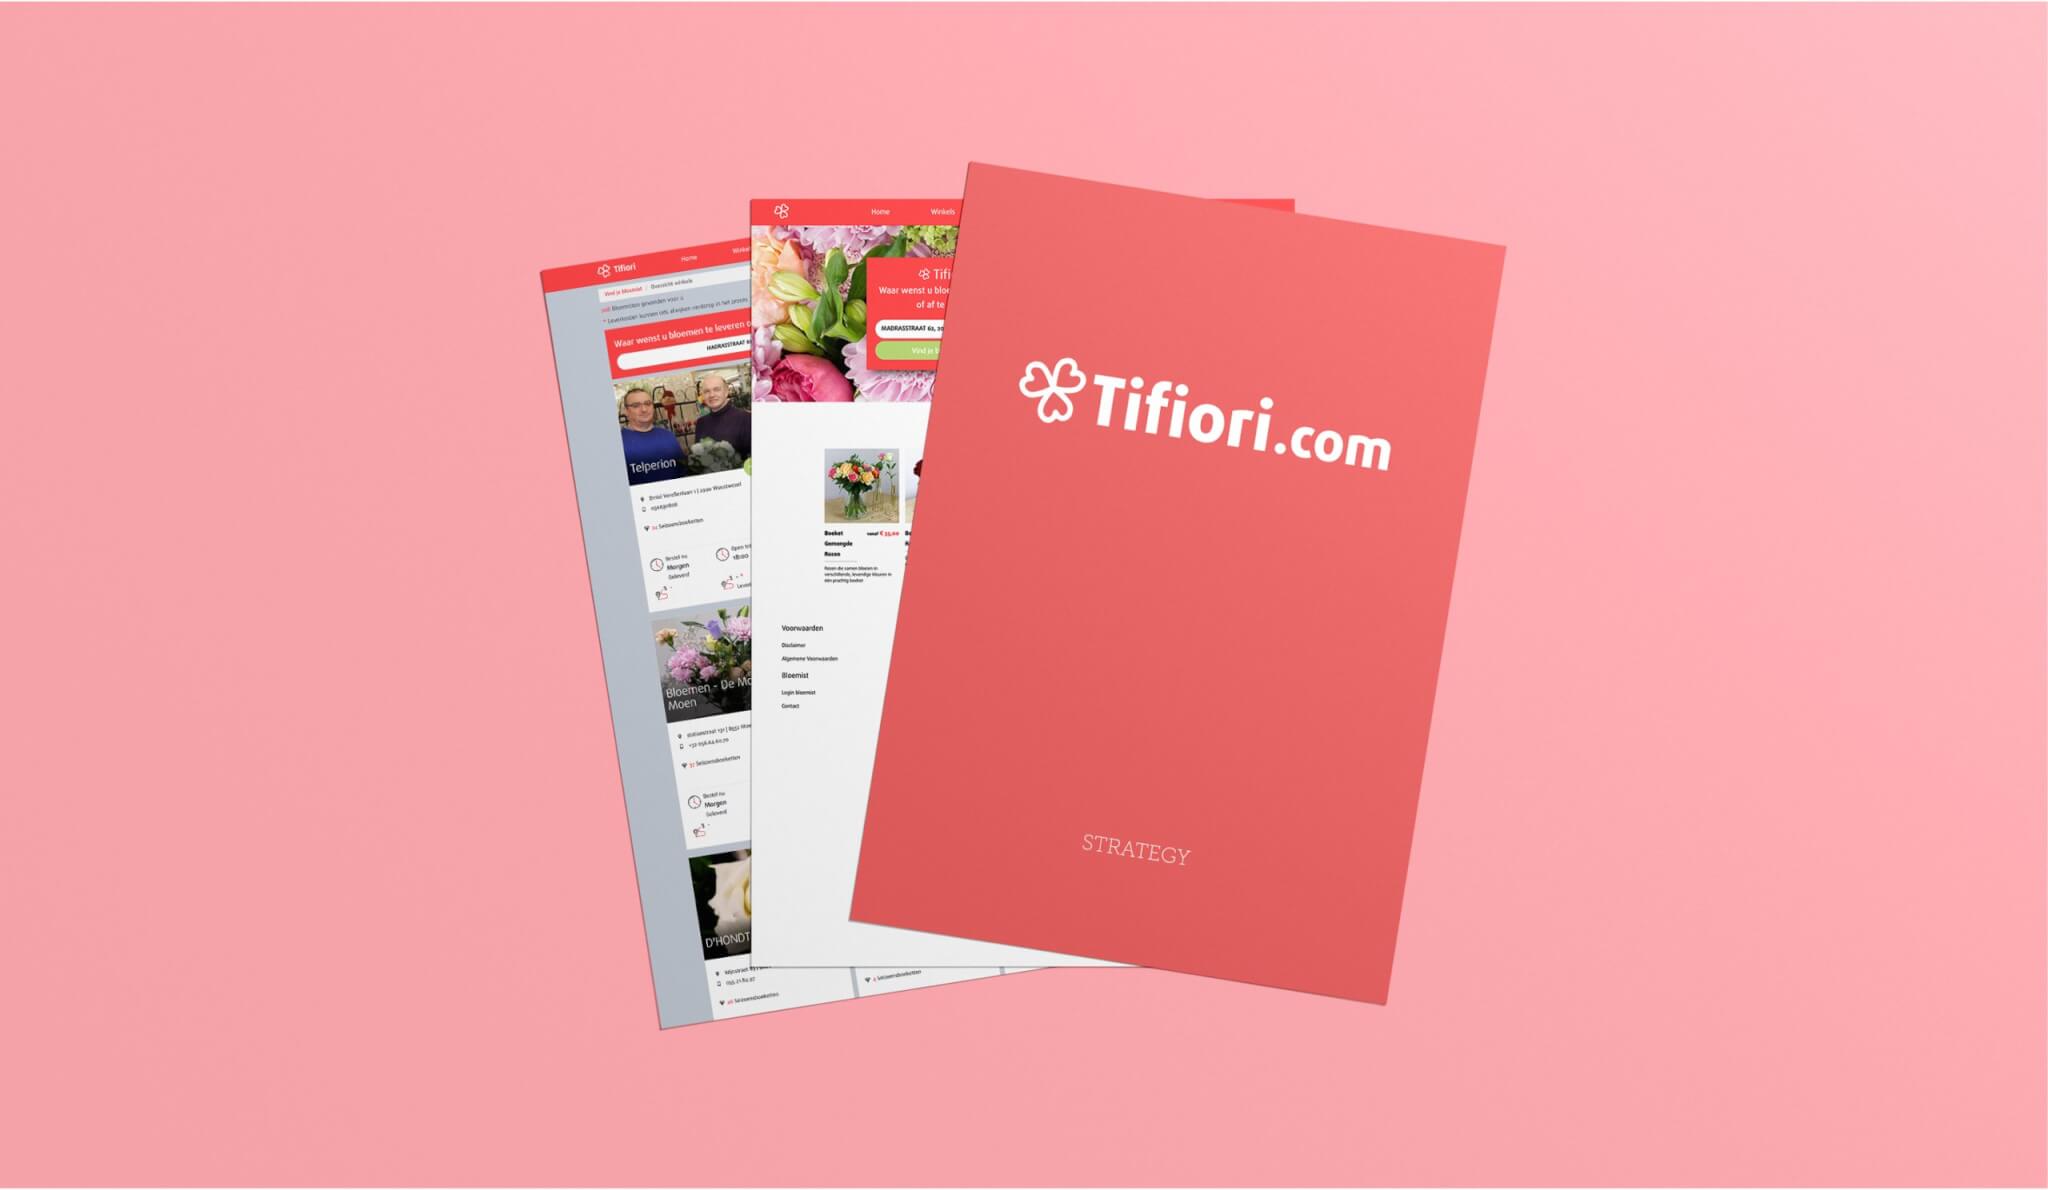 Tifiori marketing strategy